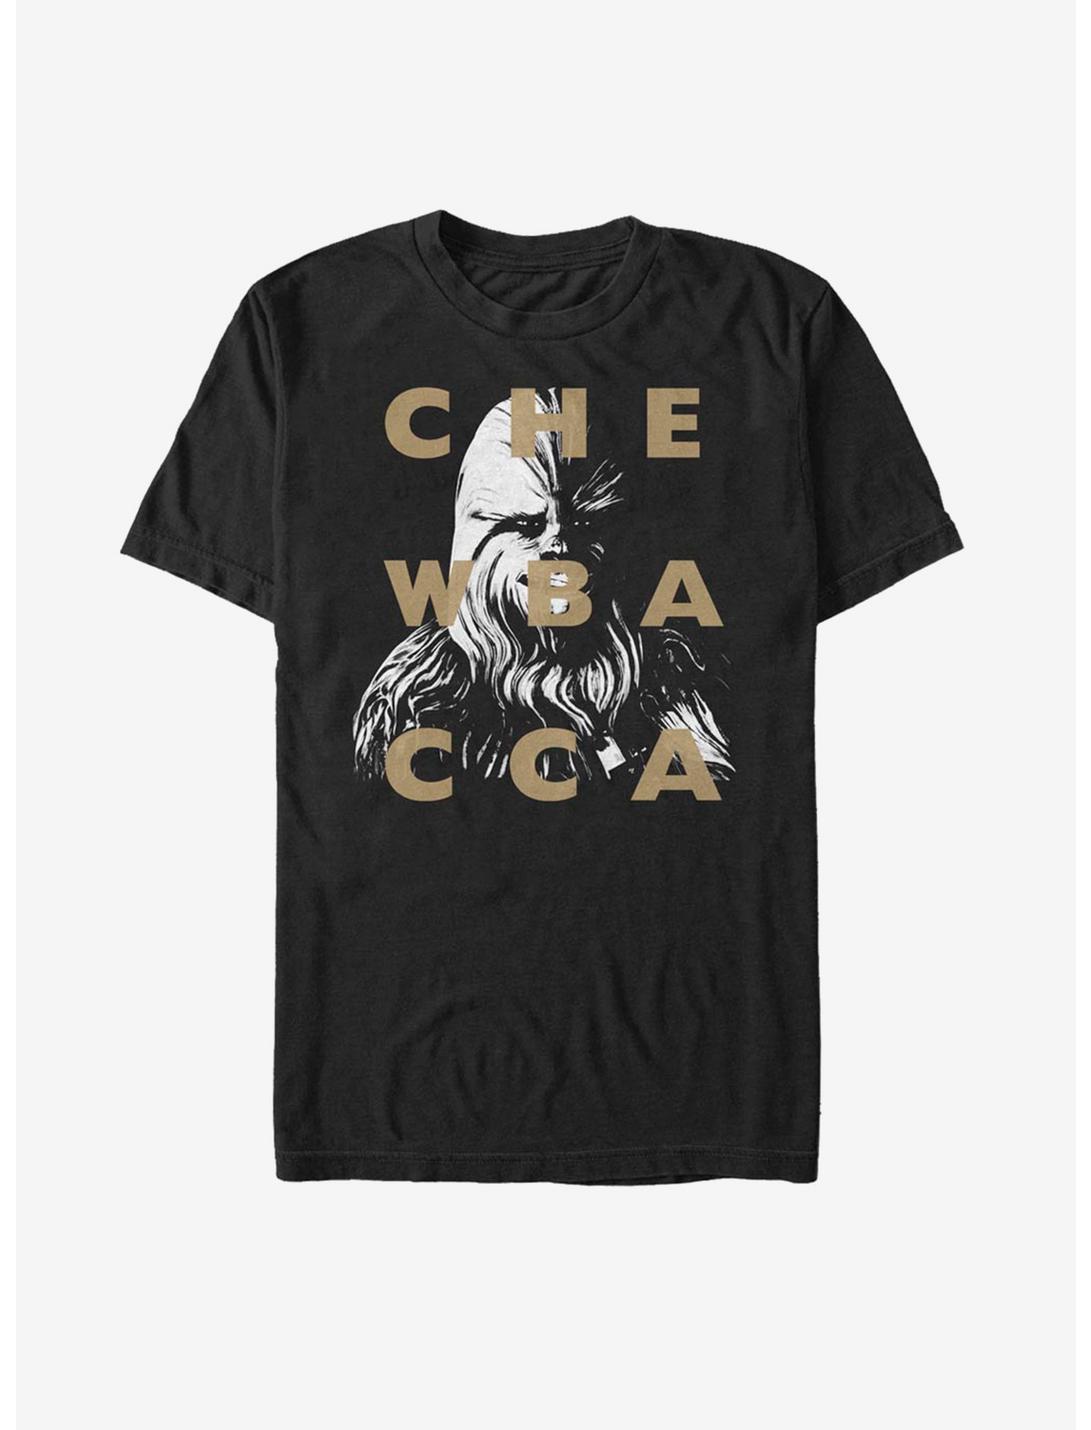 Star Wars: The Clone Wars Chewbacca Text T-Shirt, BLACK, hi-res